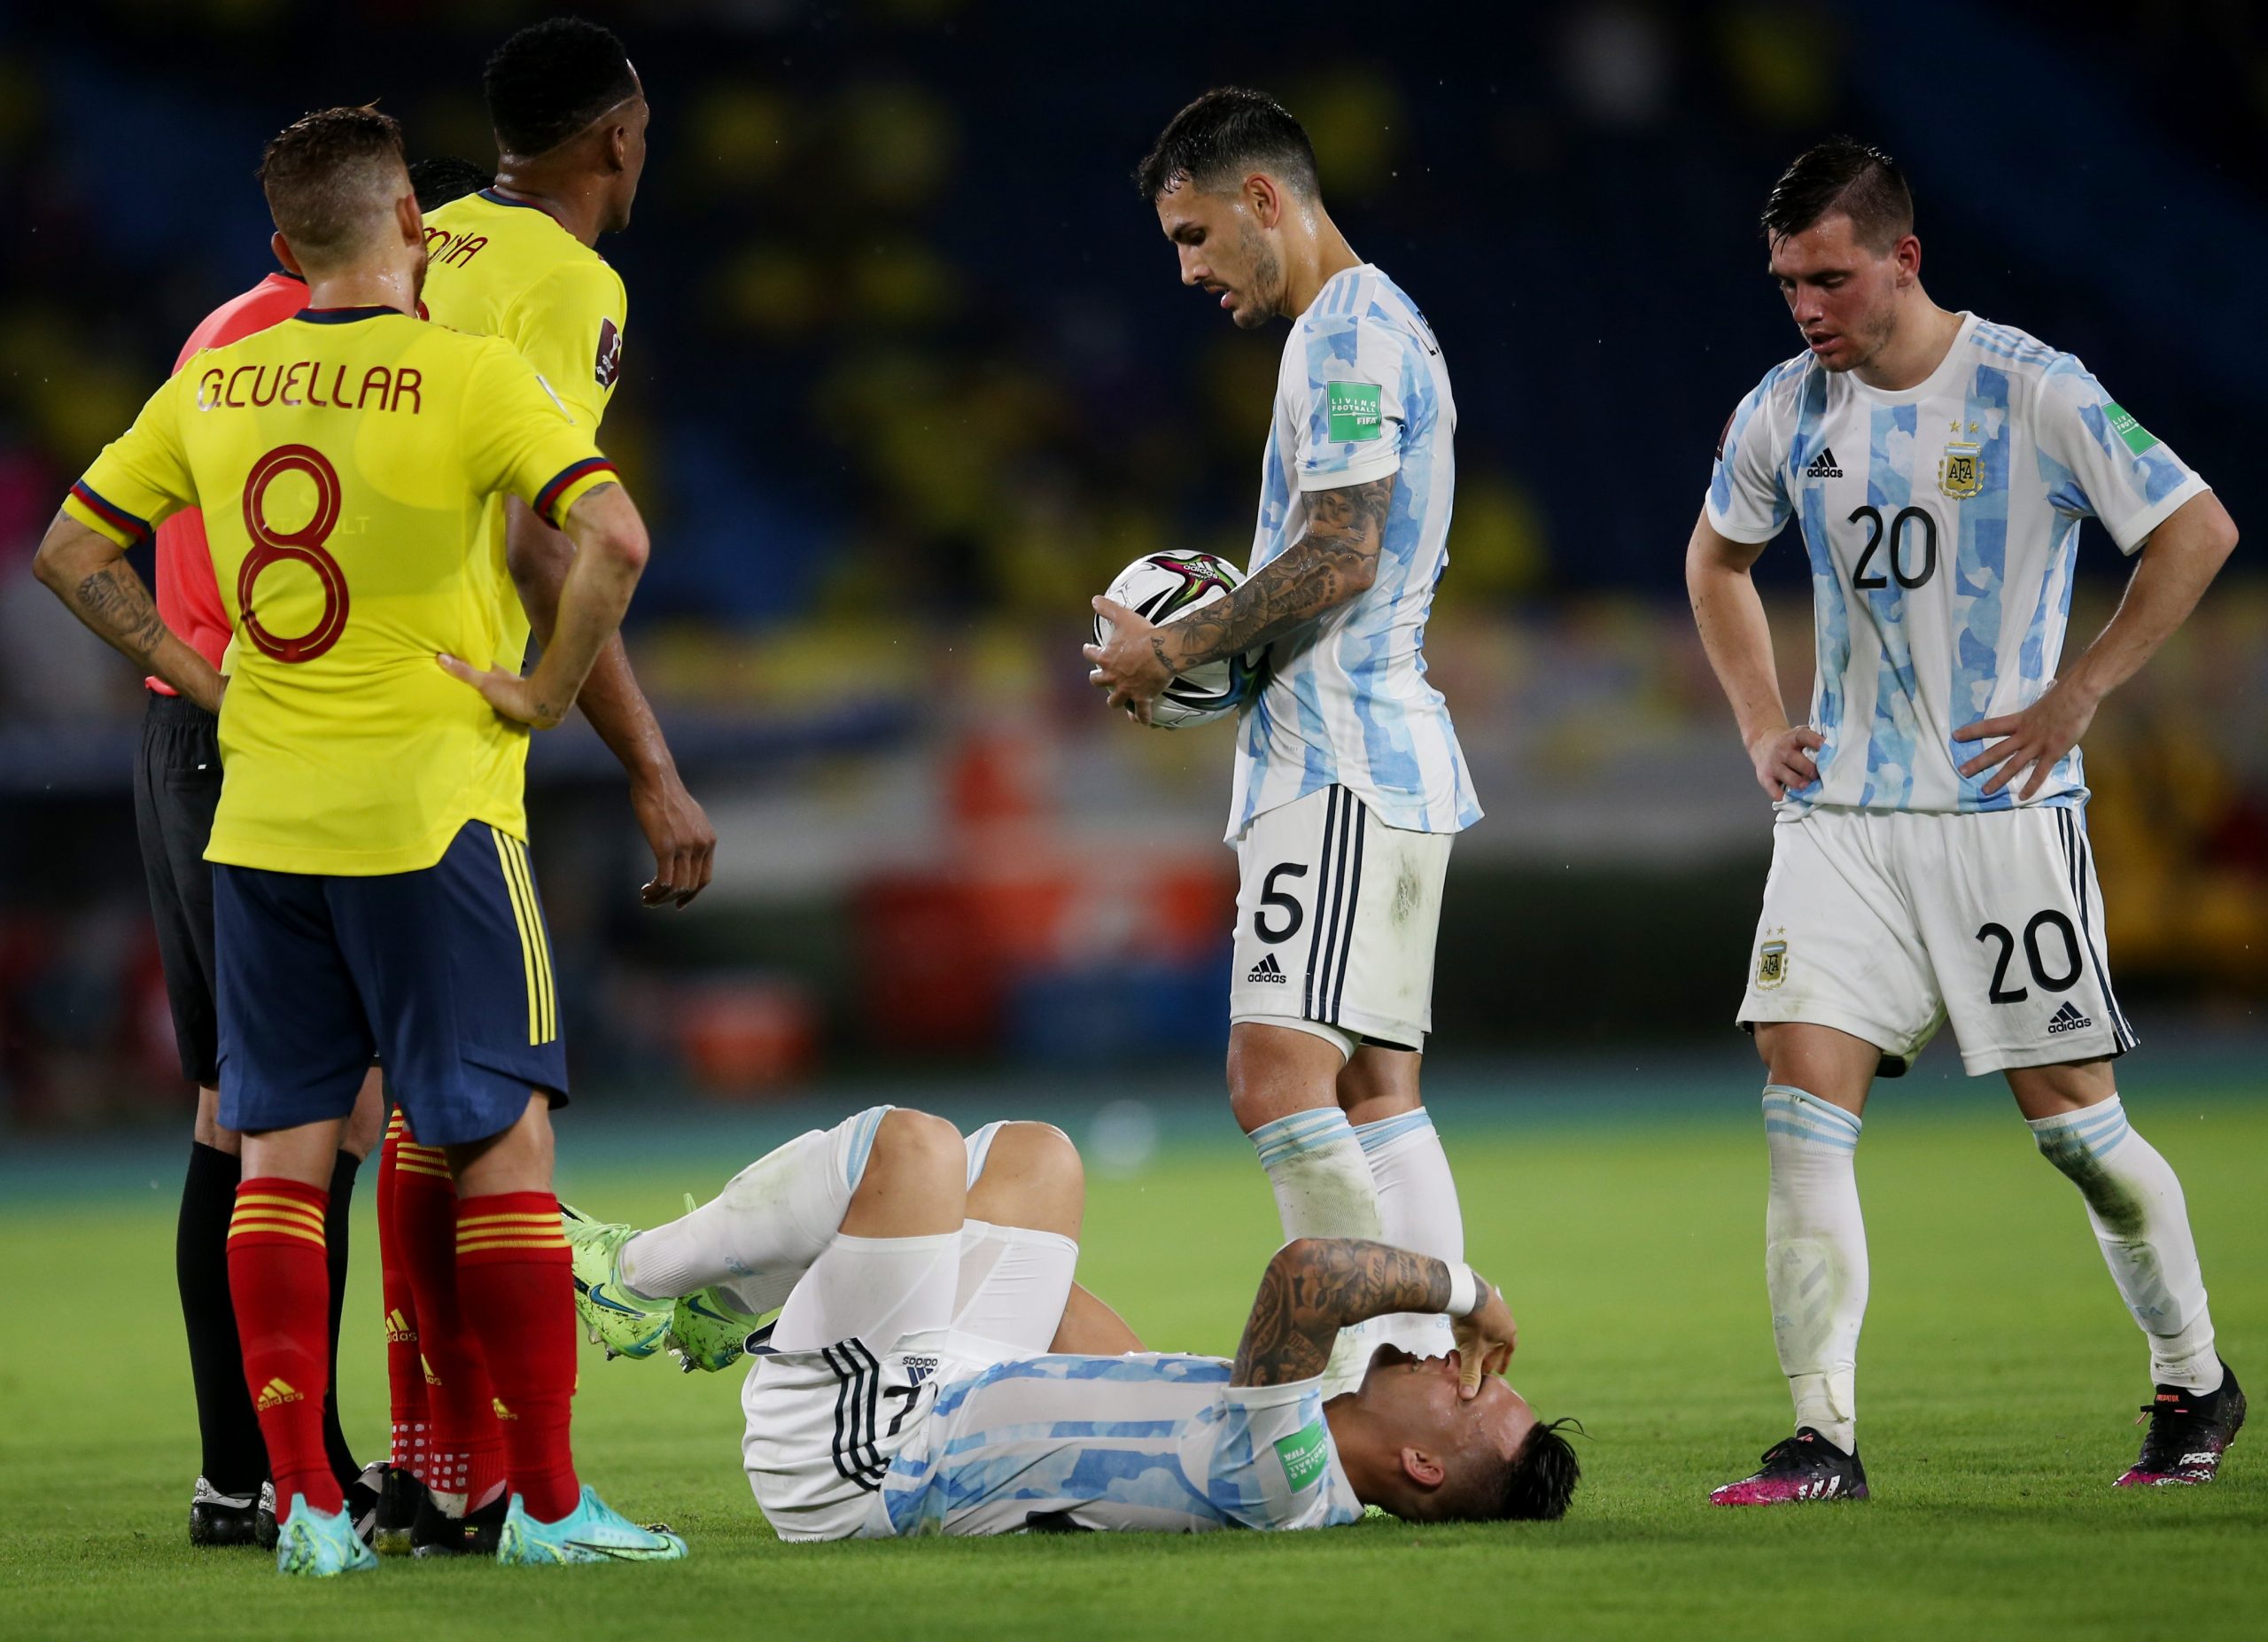 Kolombia argentina vs Argentina vs